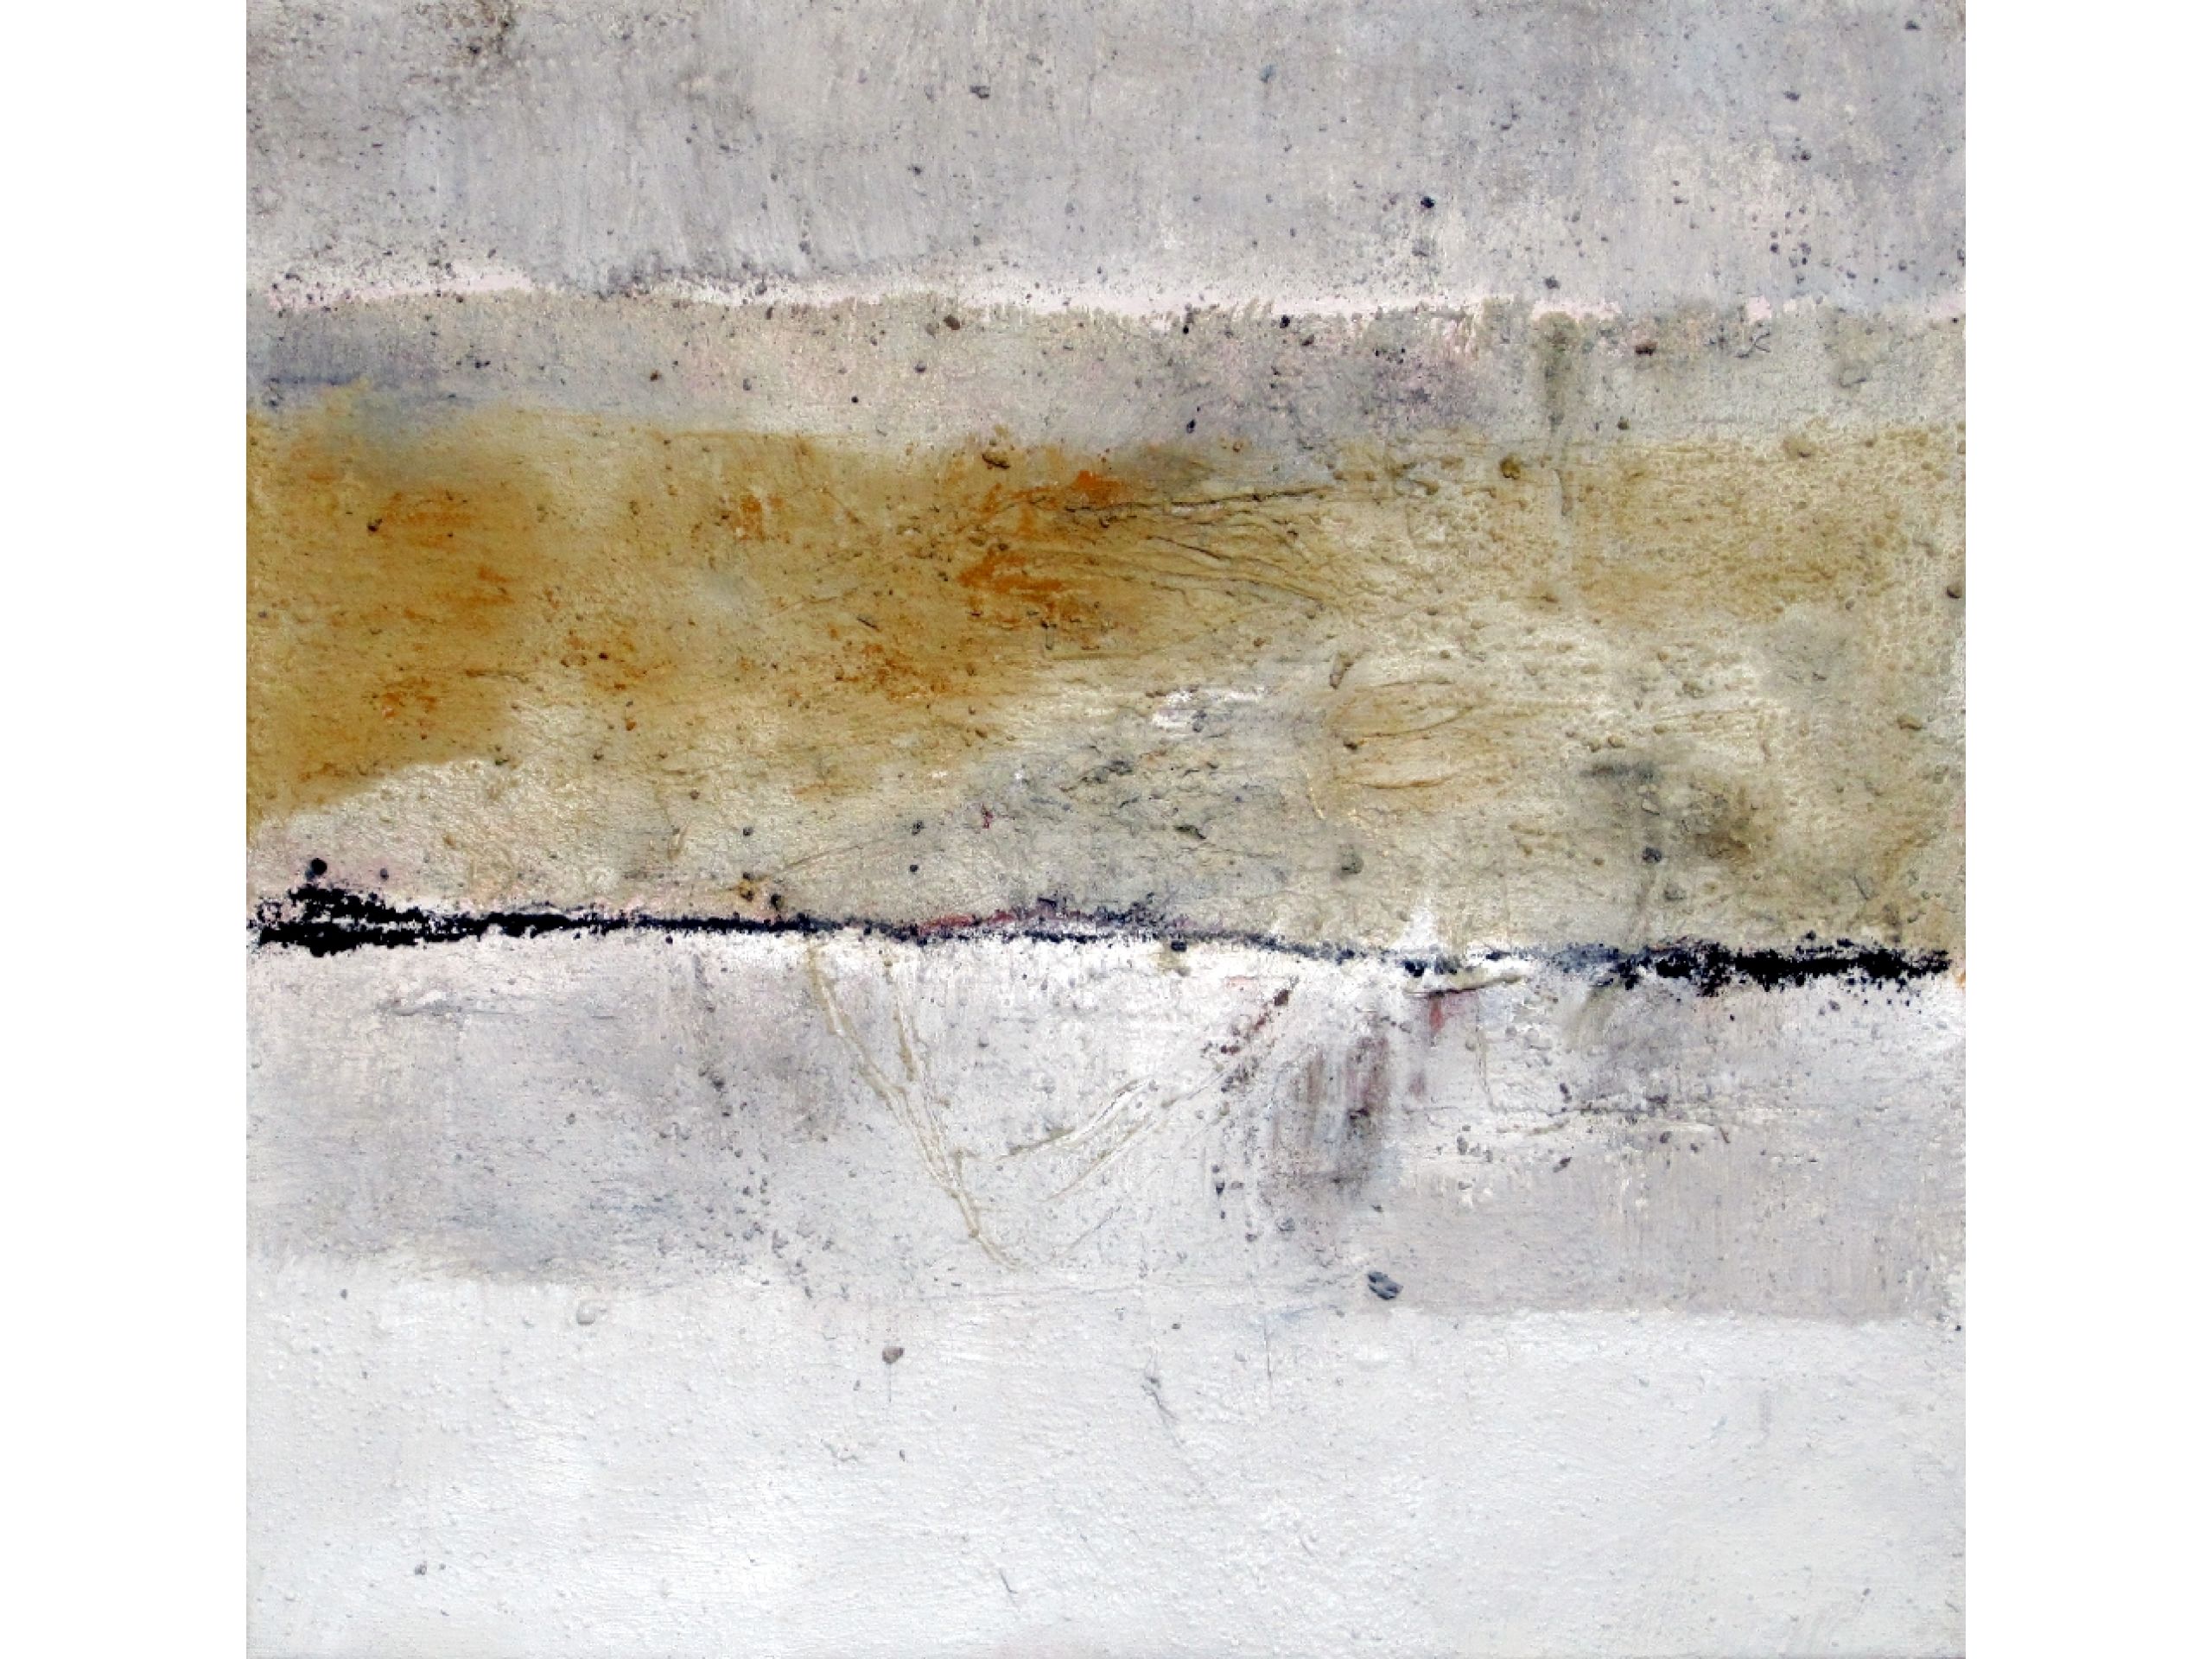 Gabriele Einstein, 'Bénoué', 2013, Öl auf Leinwand, 40 x 40 cm, 180 € 